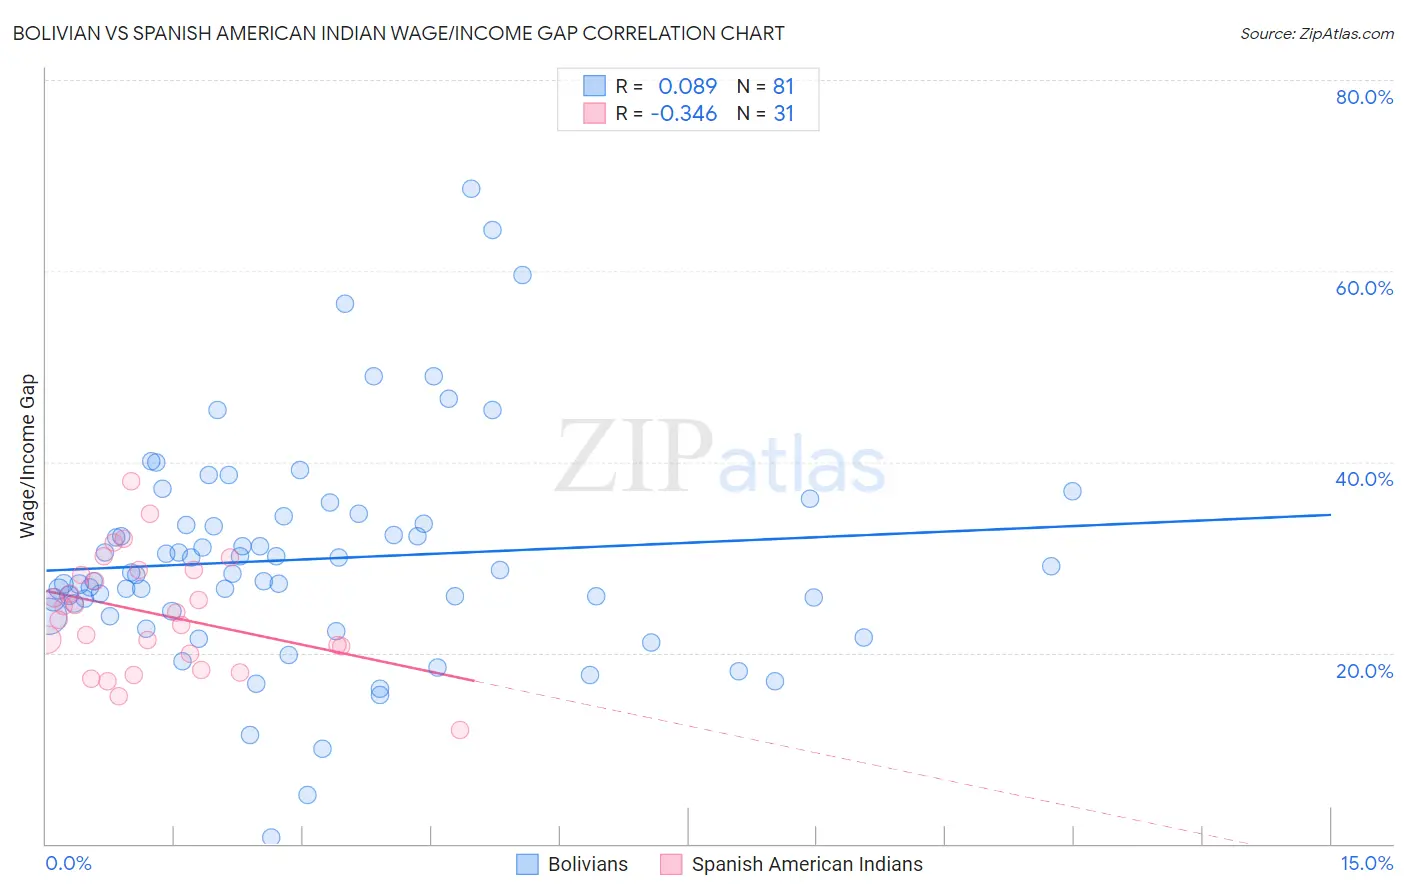 Bolivian vs Spanish American Indian Wage/Income Gap